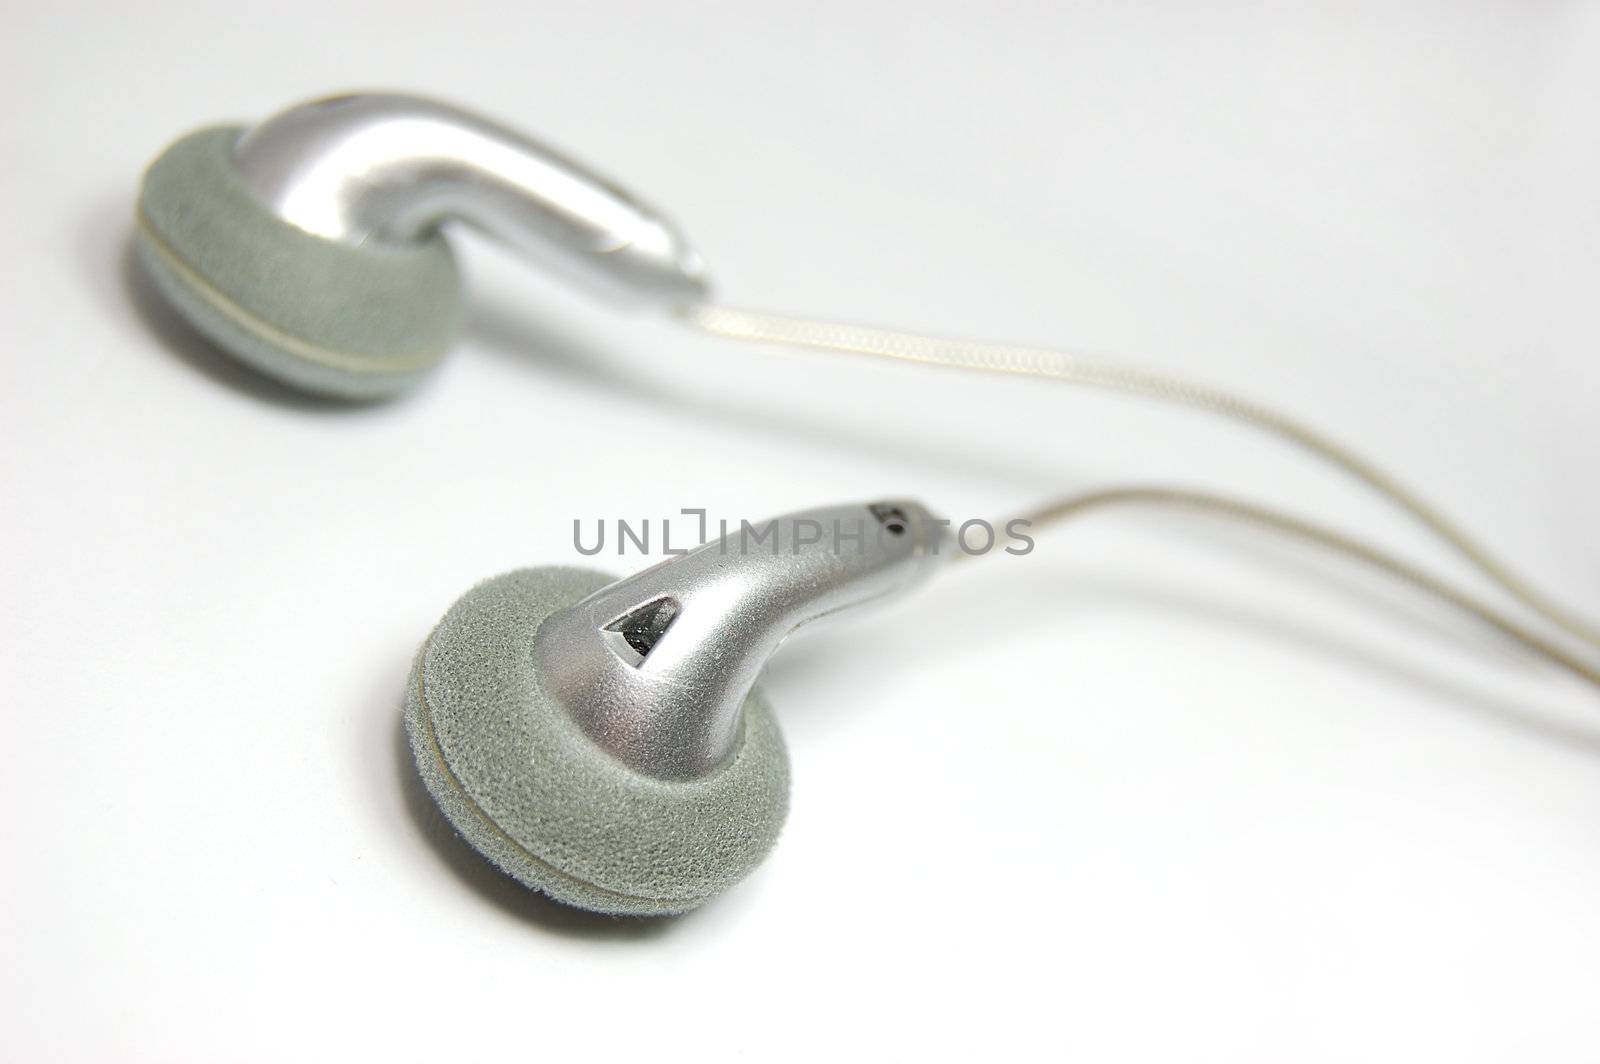 Small metallic headphones on slightly gray background